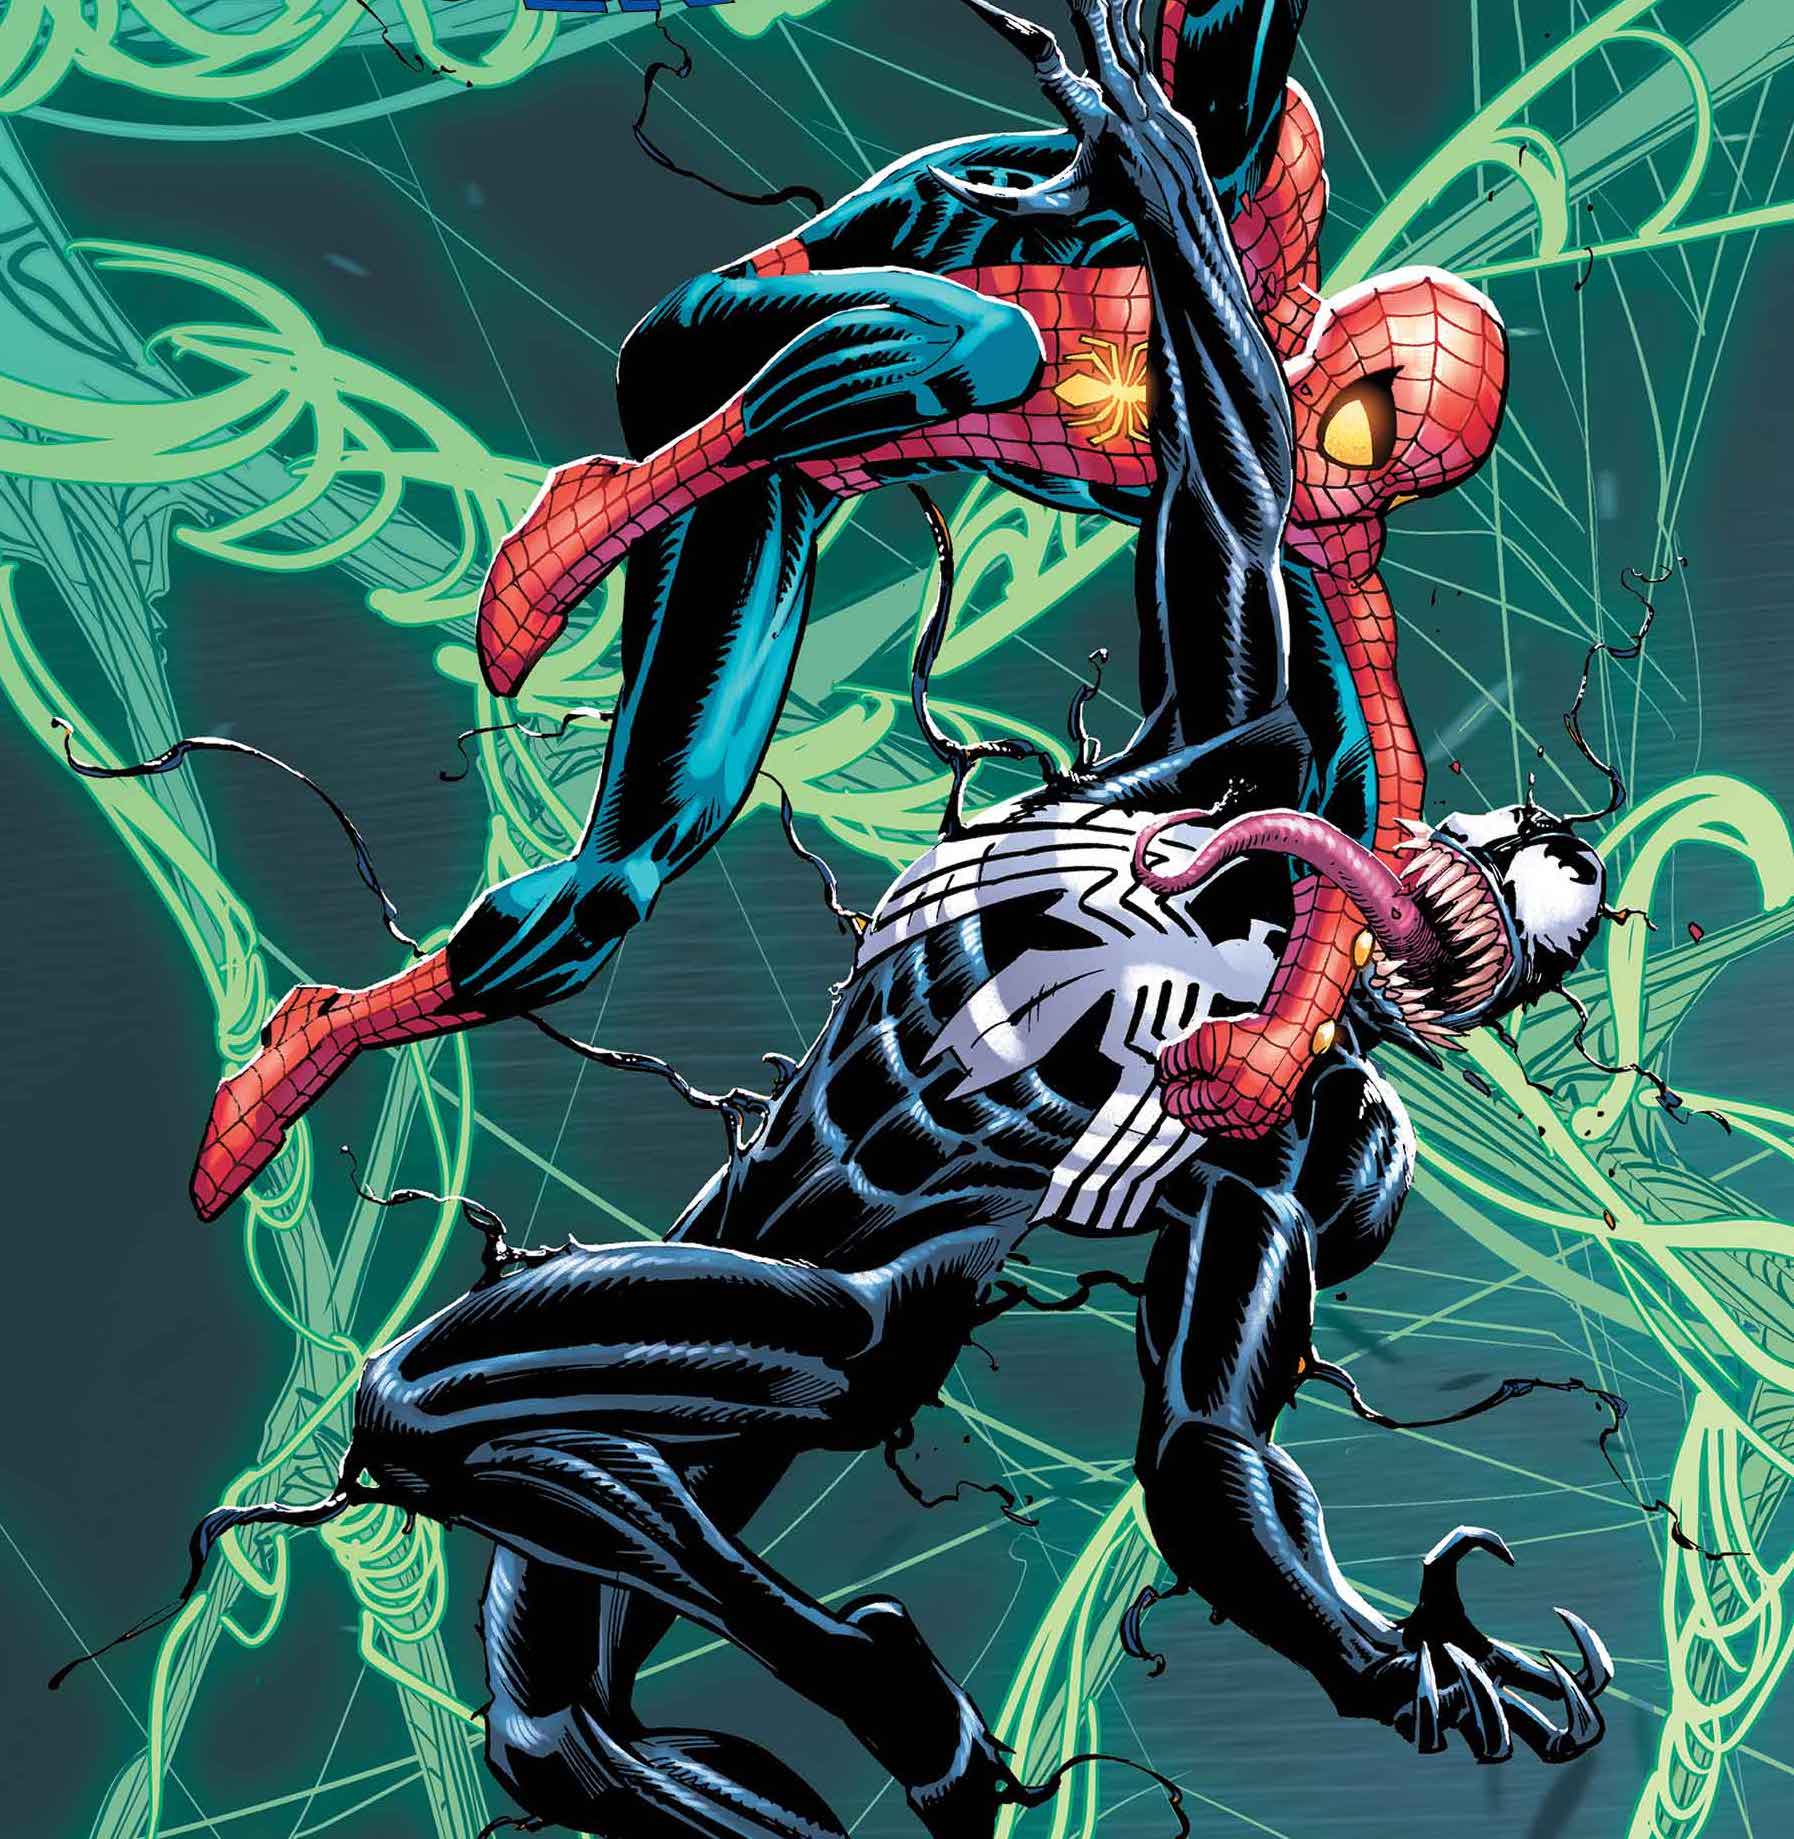 'Amazing Spider-Man' #15 works with zany Venom and demon scenes